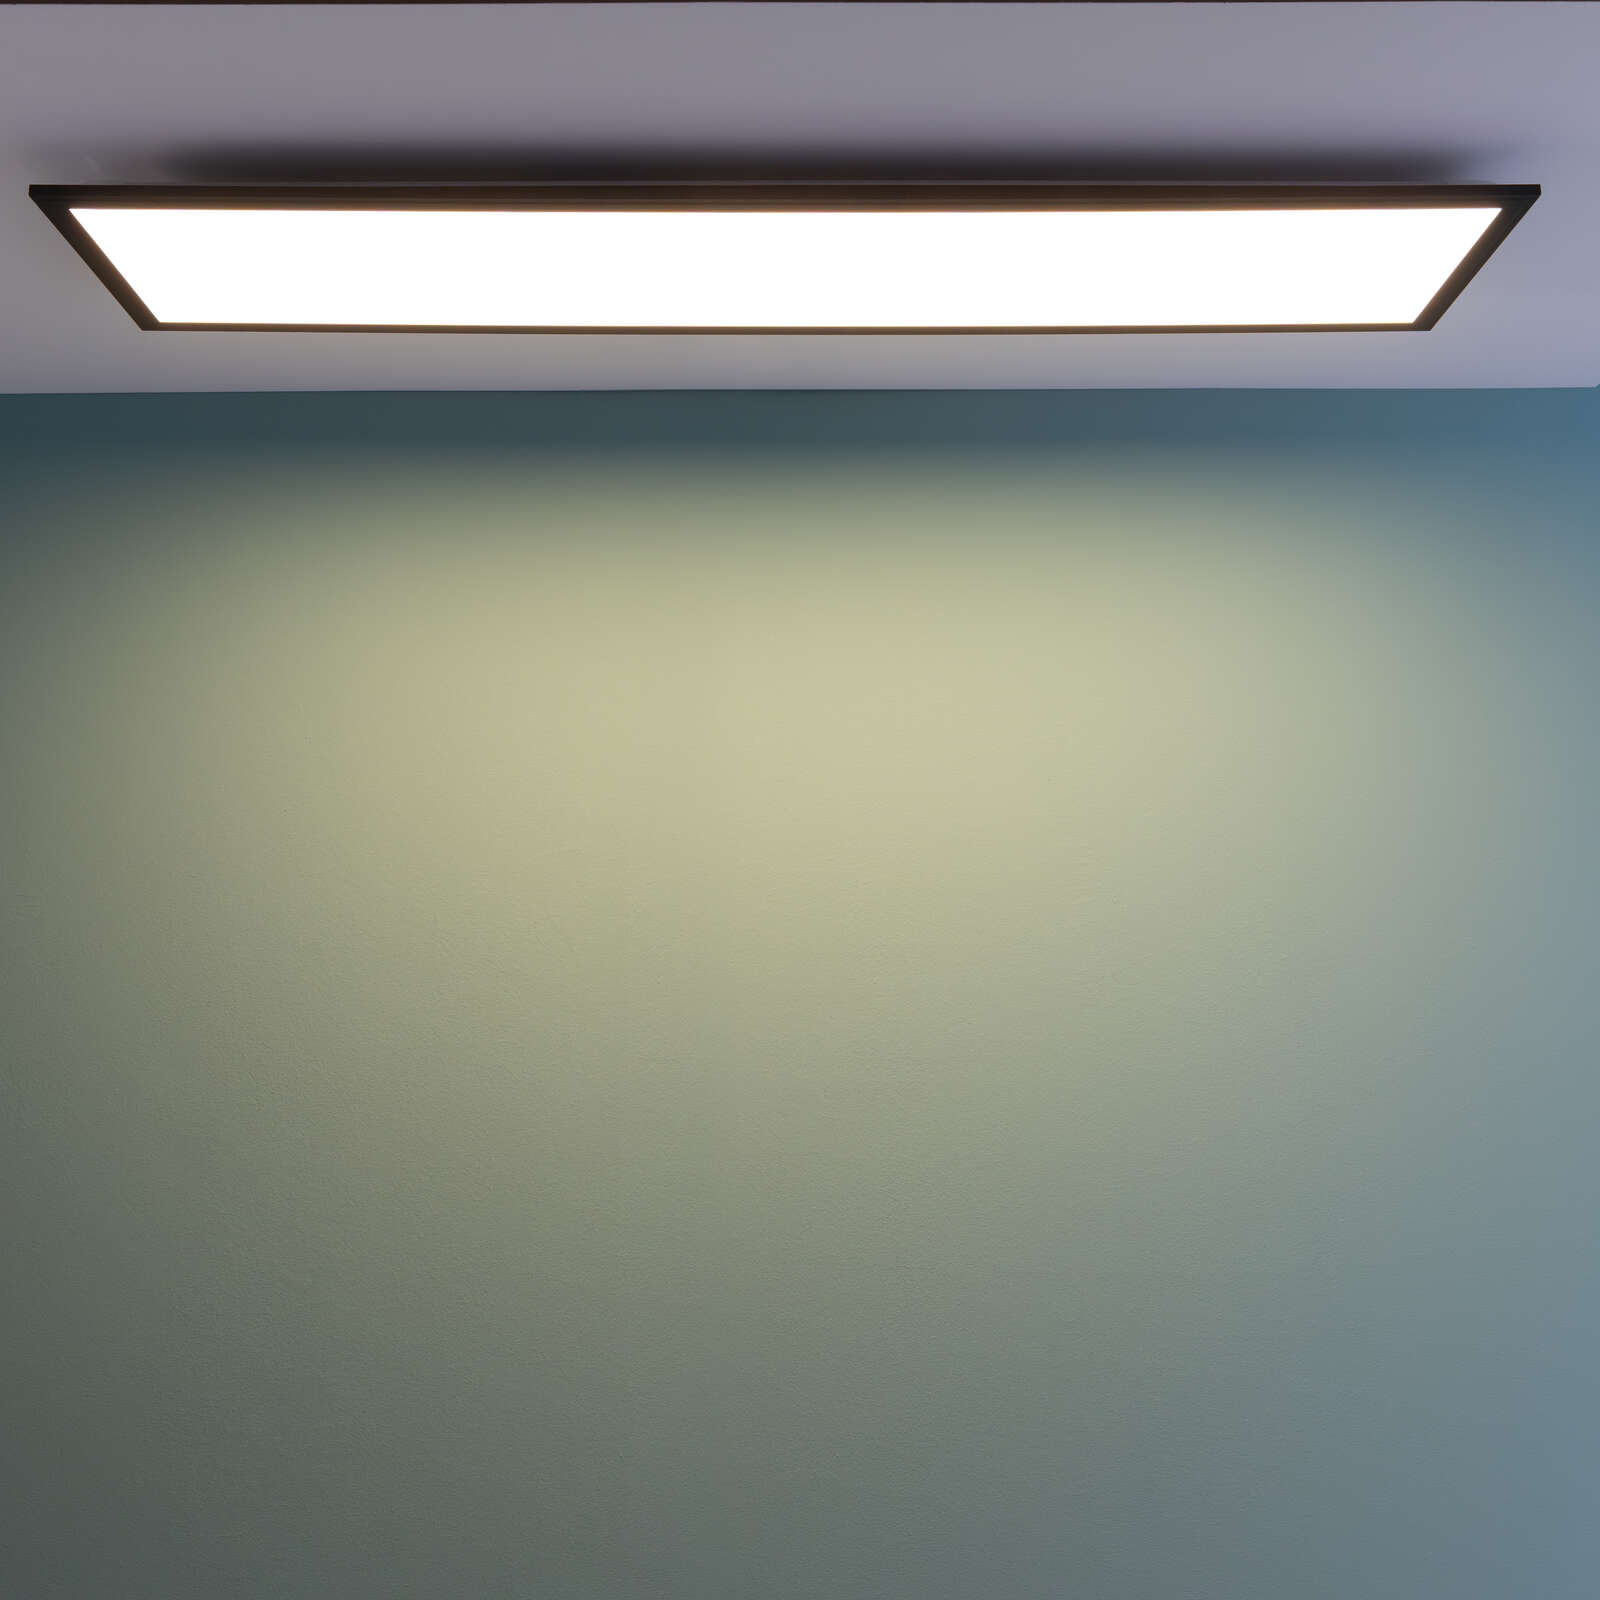             Kunststof plafondlamp - Fridolin - Zwart
        